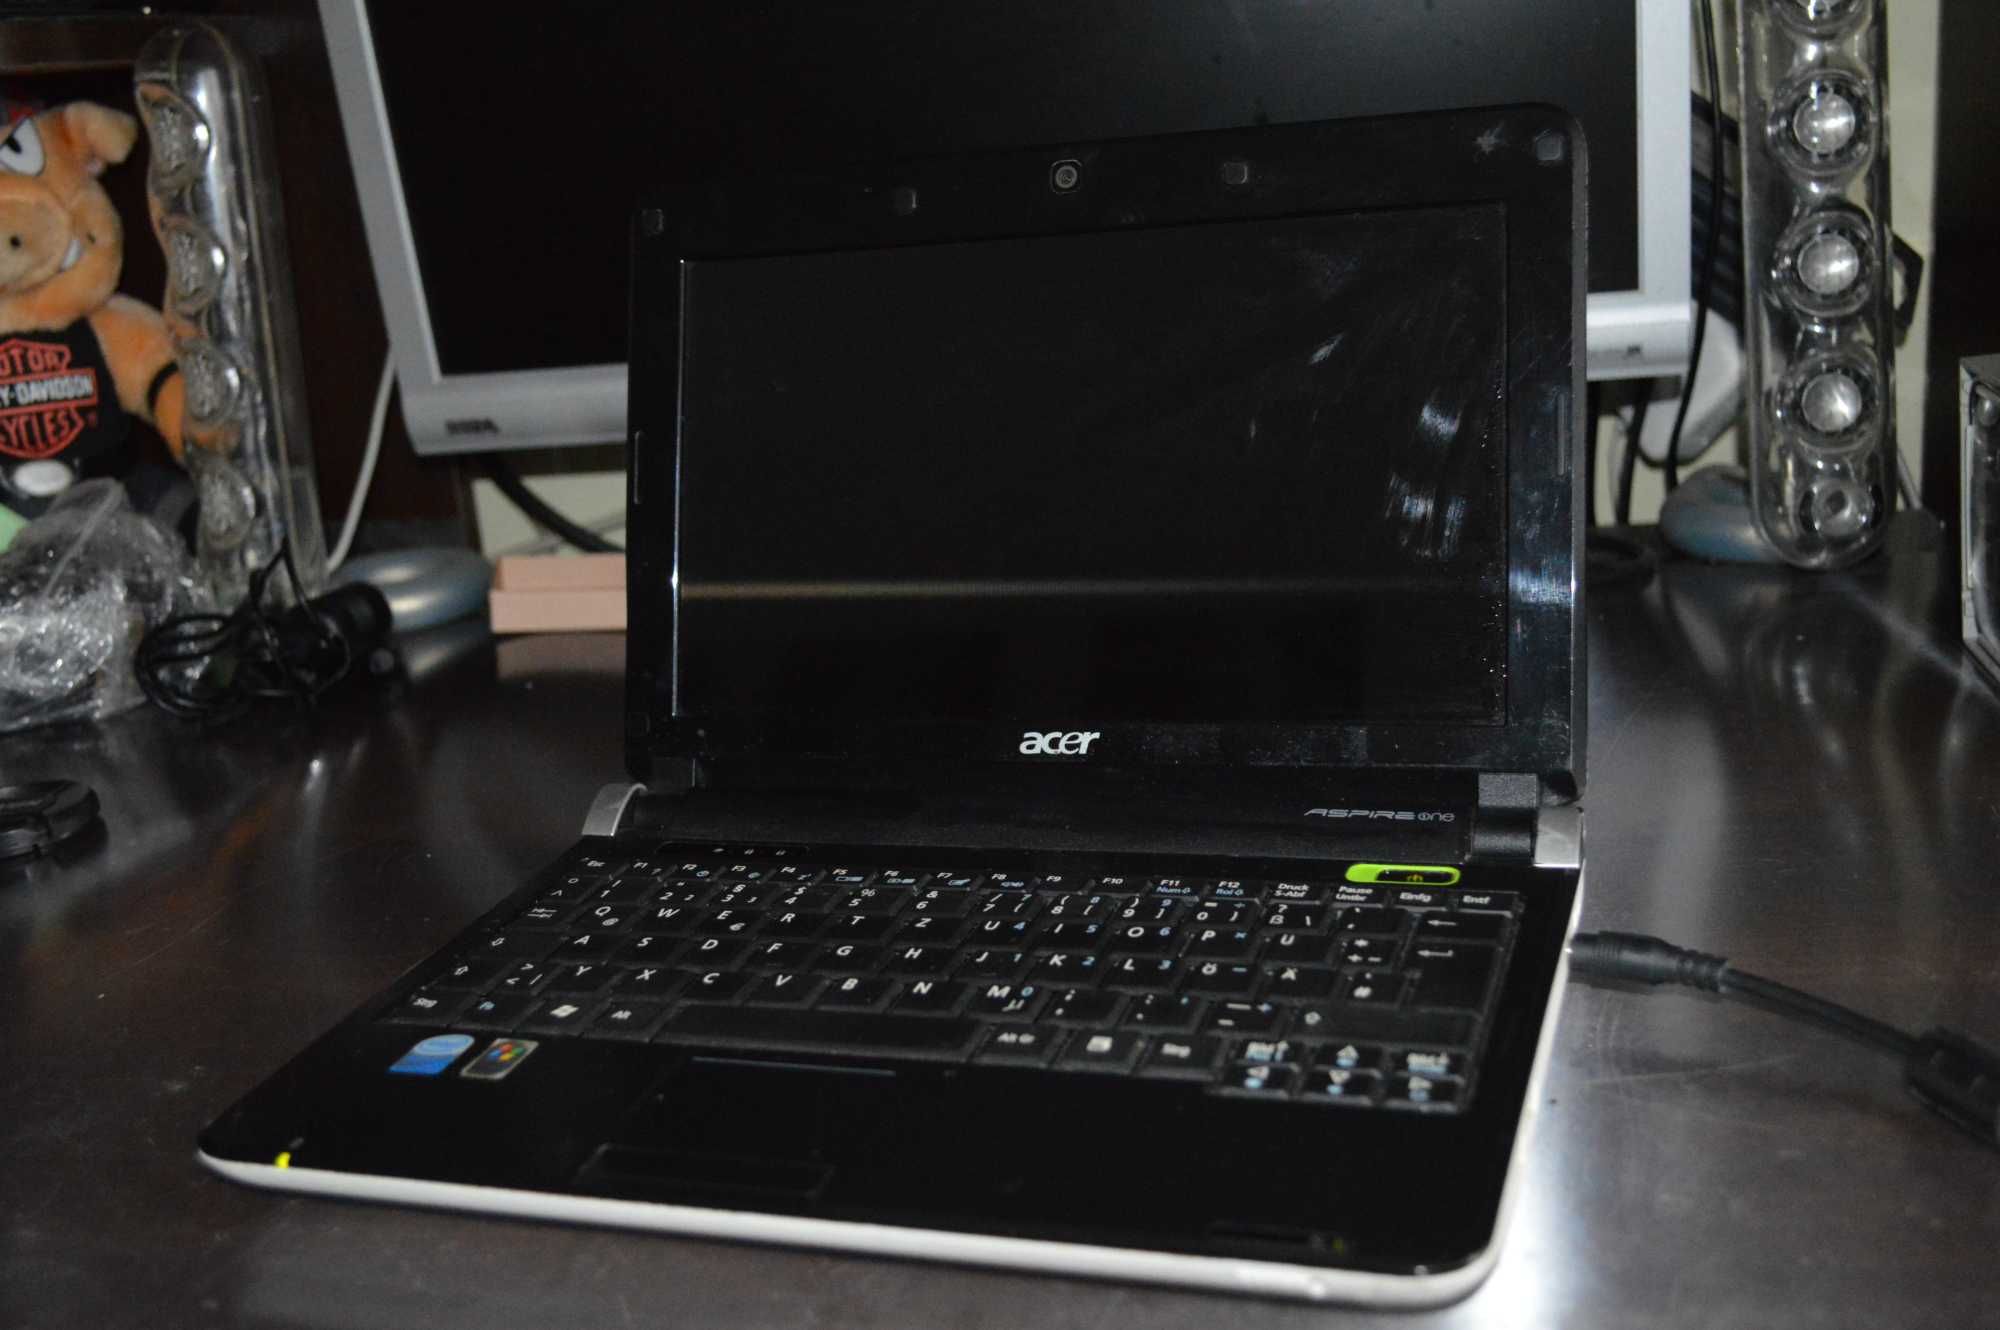 Нетбук Acer KAV10 10.1 Intel N280 2 RAM 160 HDD